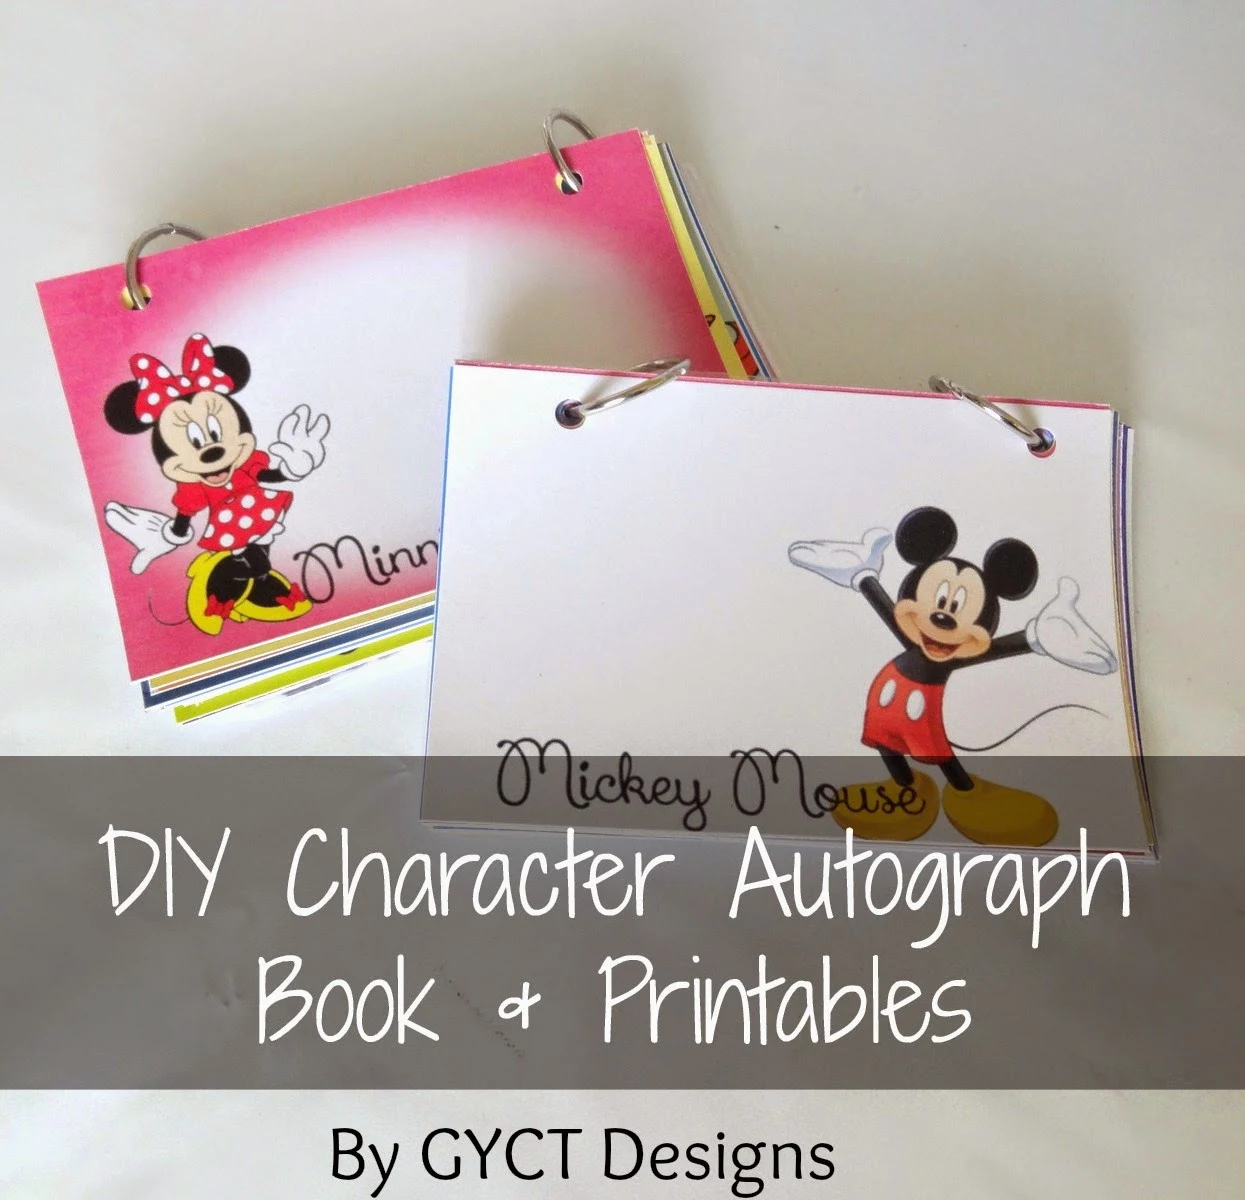 Diy Disney Autograph Book And Printables | Sew Simple Home in Free Printable Autograph Book For Kids